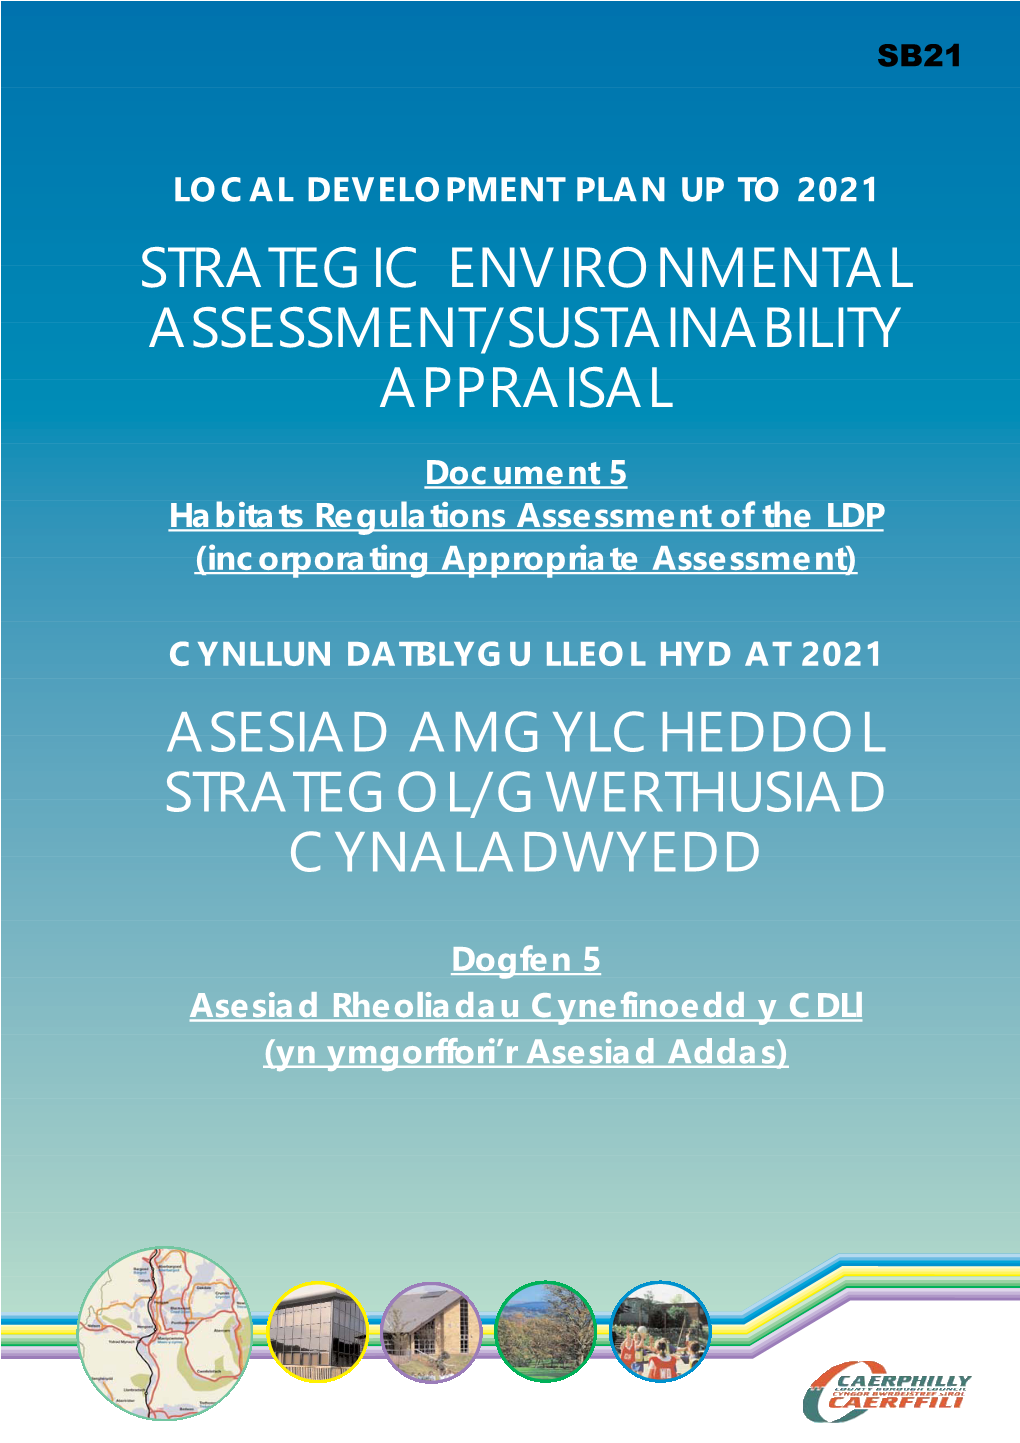 Habitats Regulations Assess. (PDF 1.3Mb)